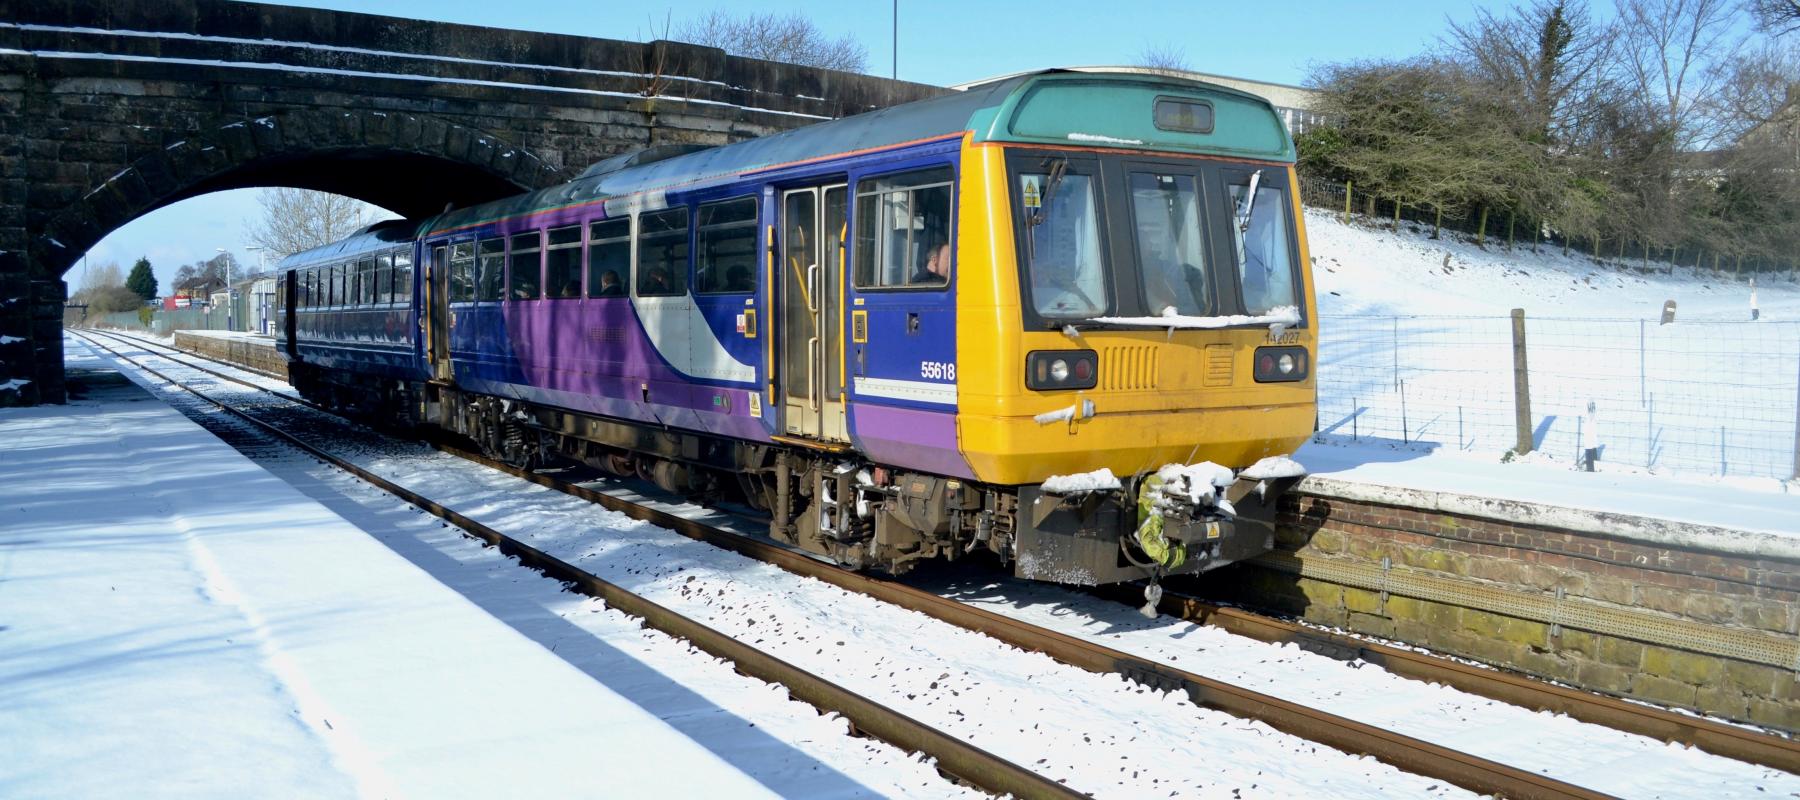 Train heading to Leeds through snowy countryside